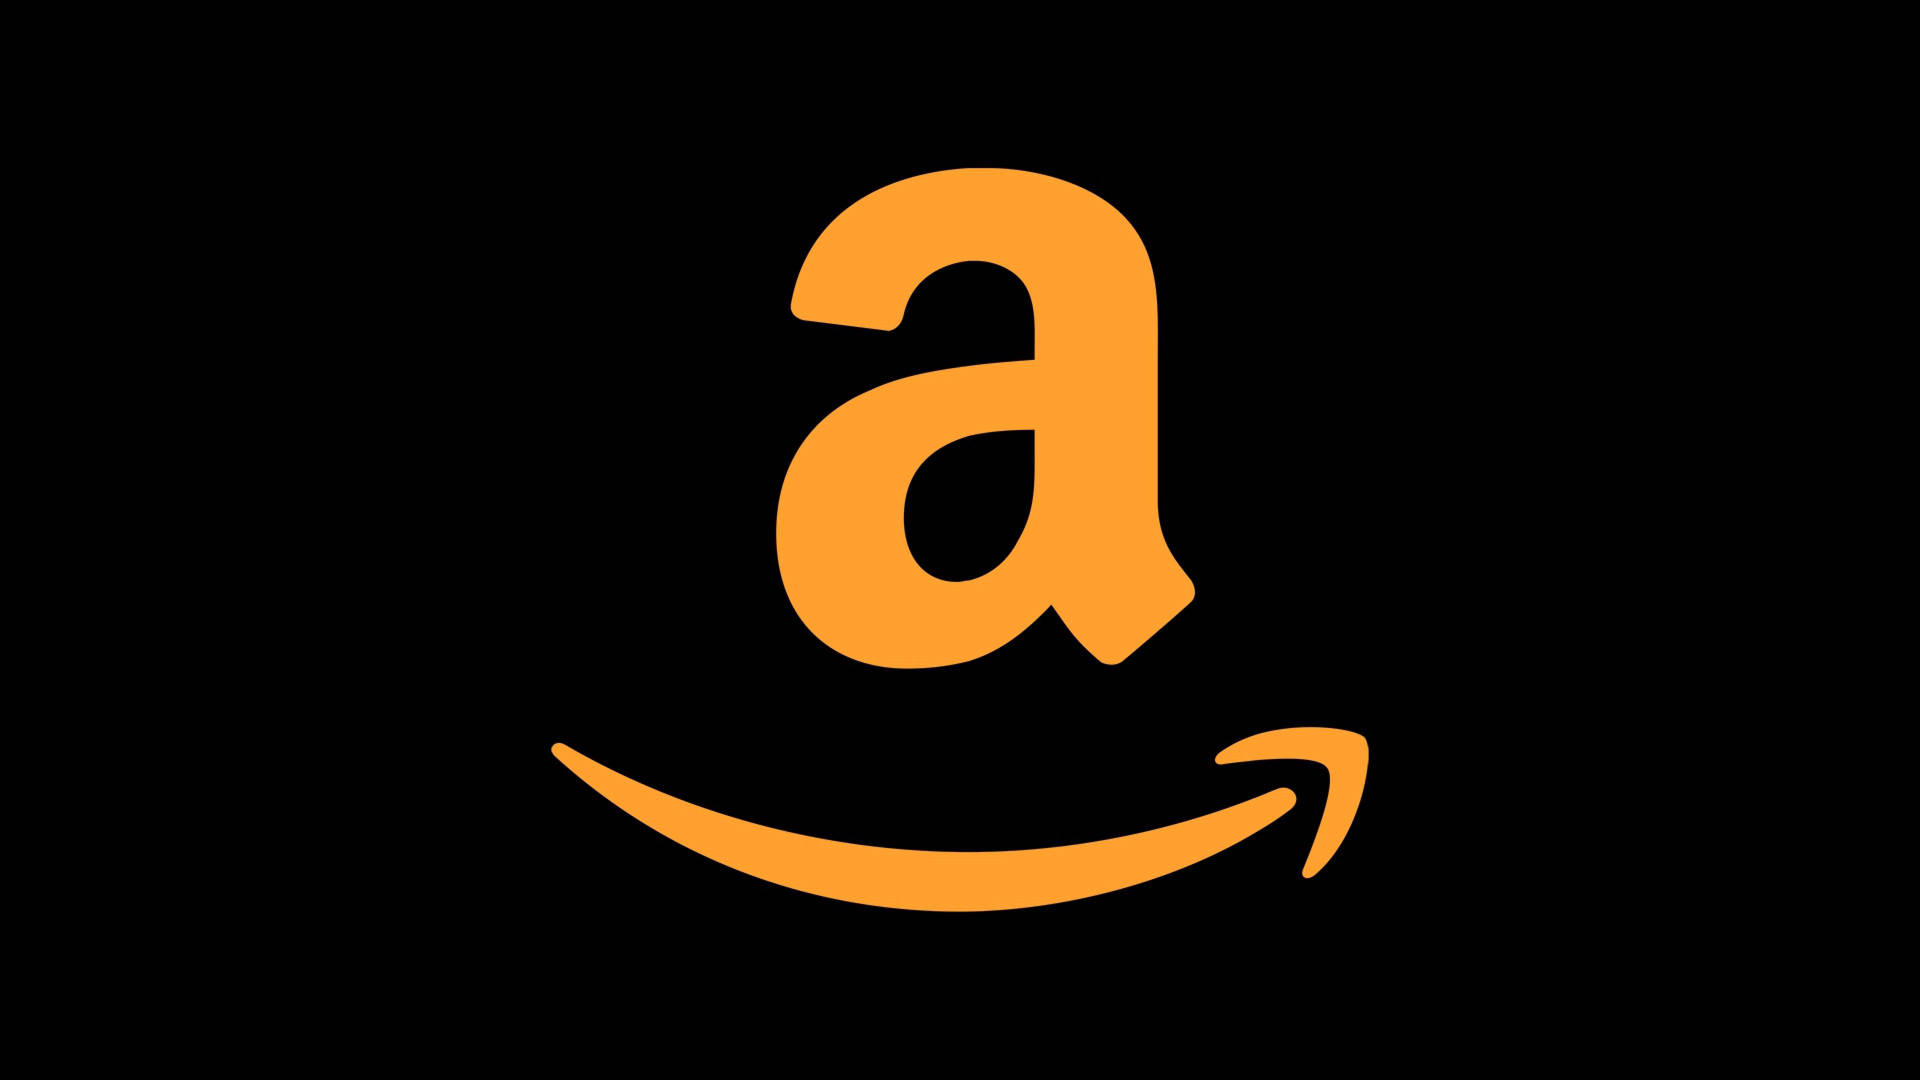 Amazon Logo On Black Background Wallpaper